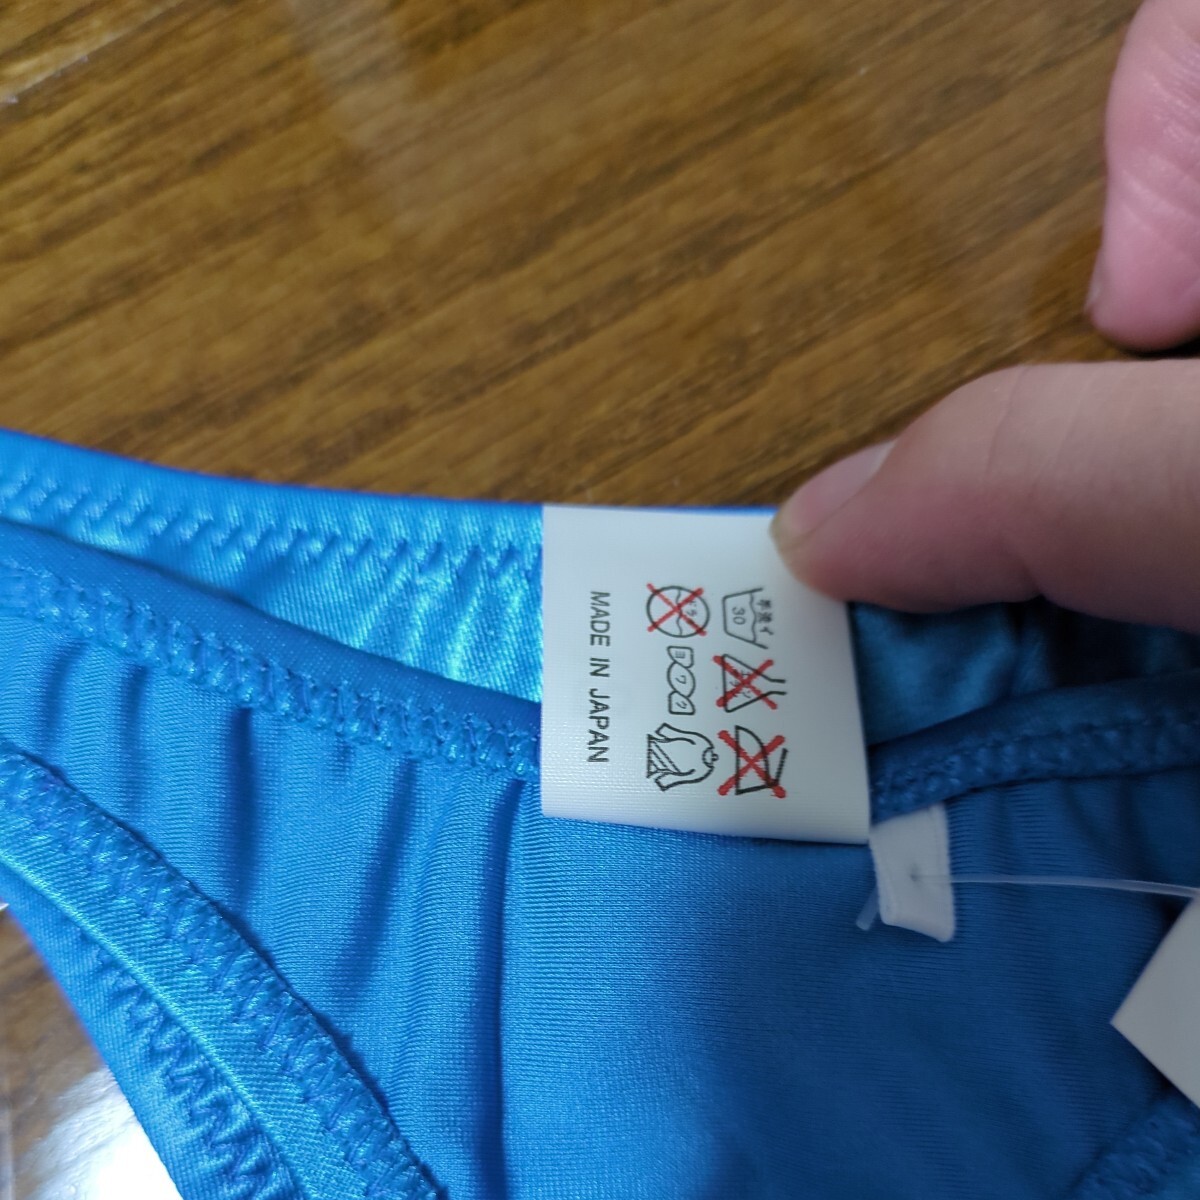 DIPLO collection T-back bikini swimsuit size M corresponding made in Japan glistening blue bikini 